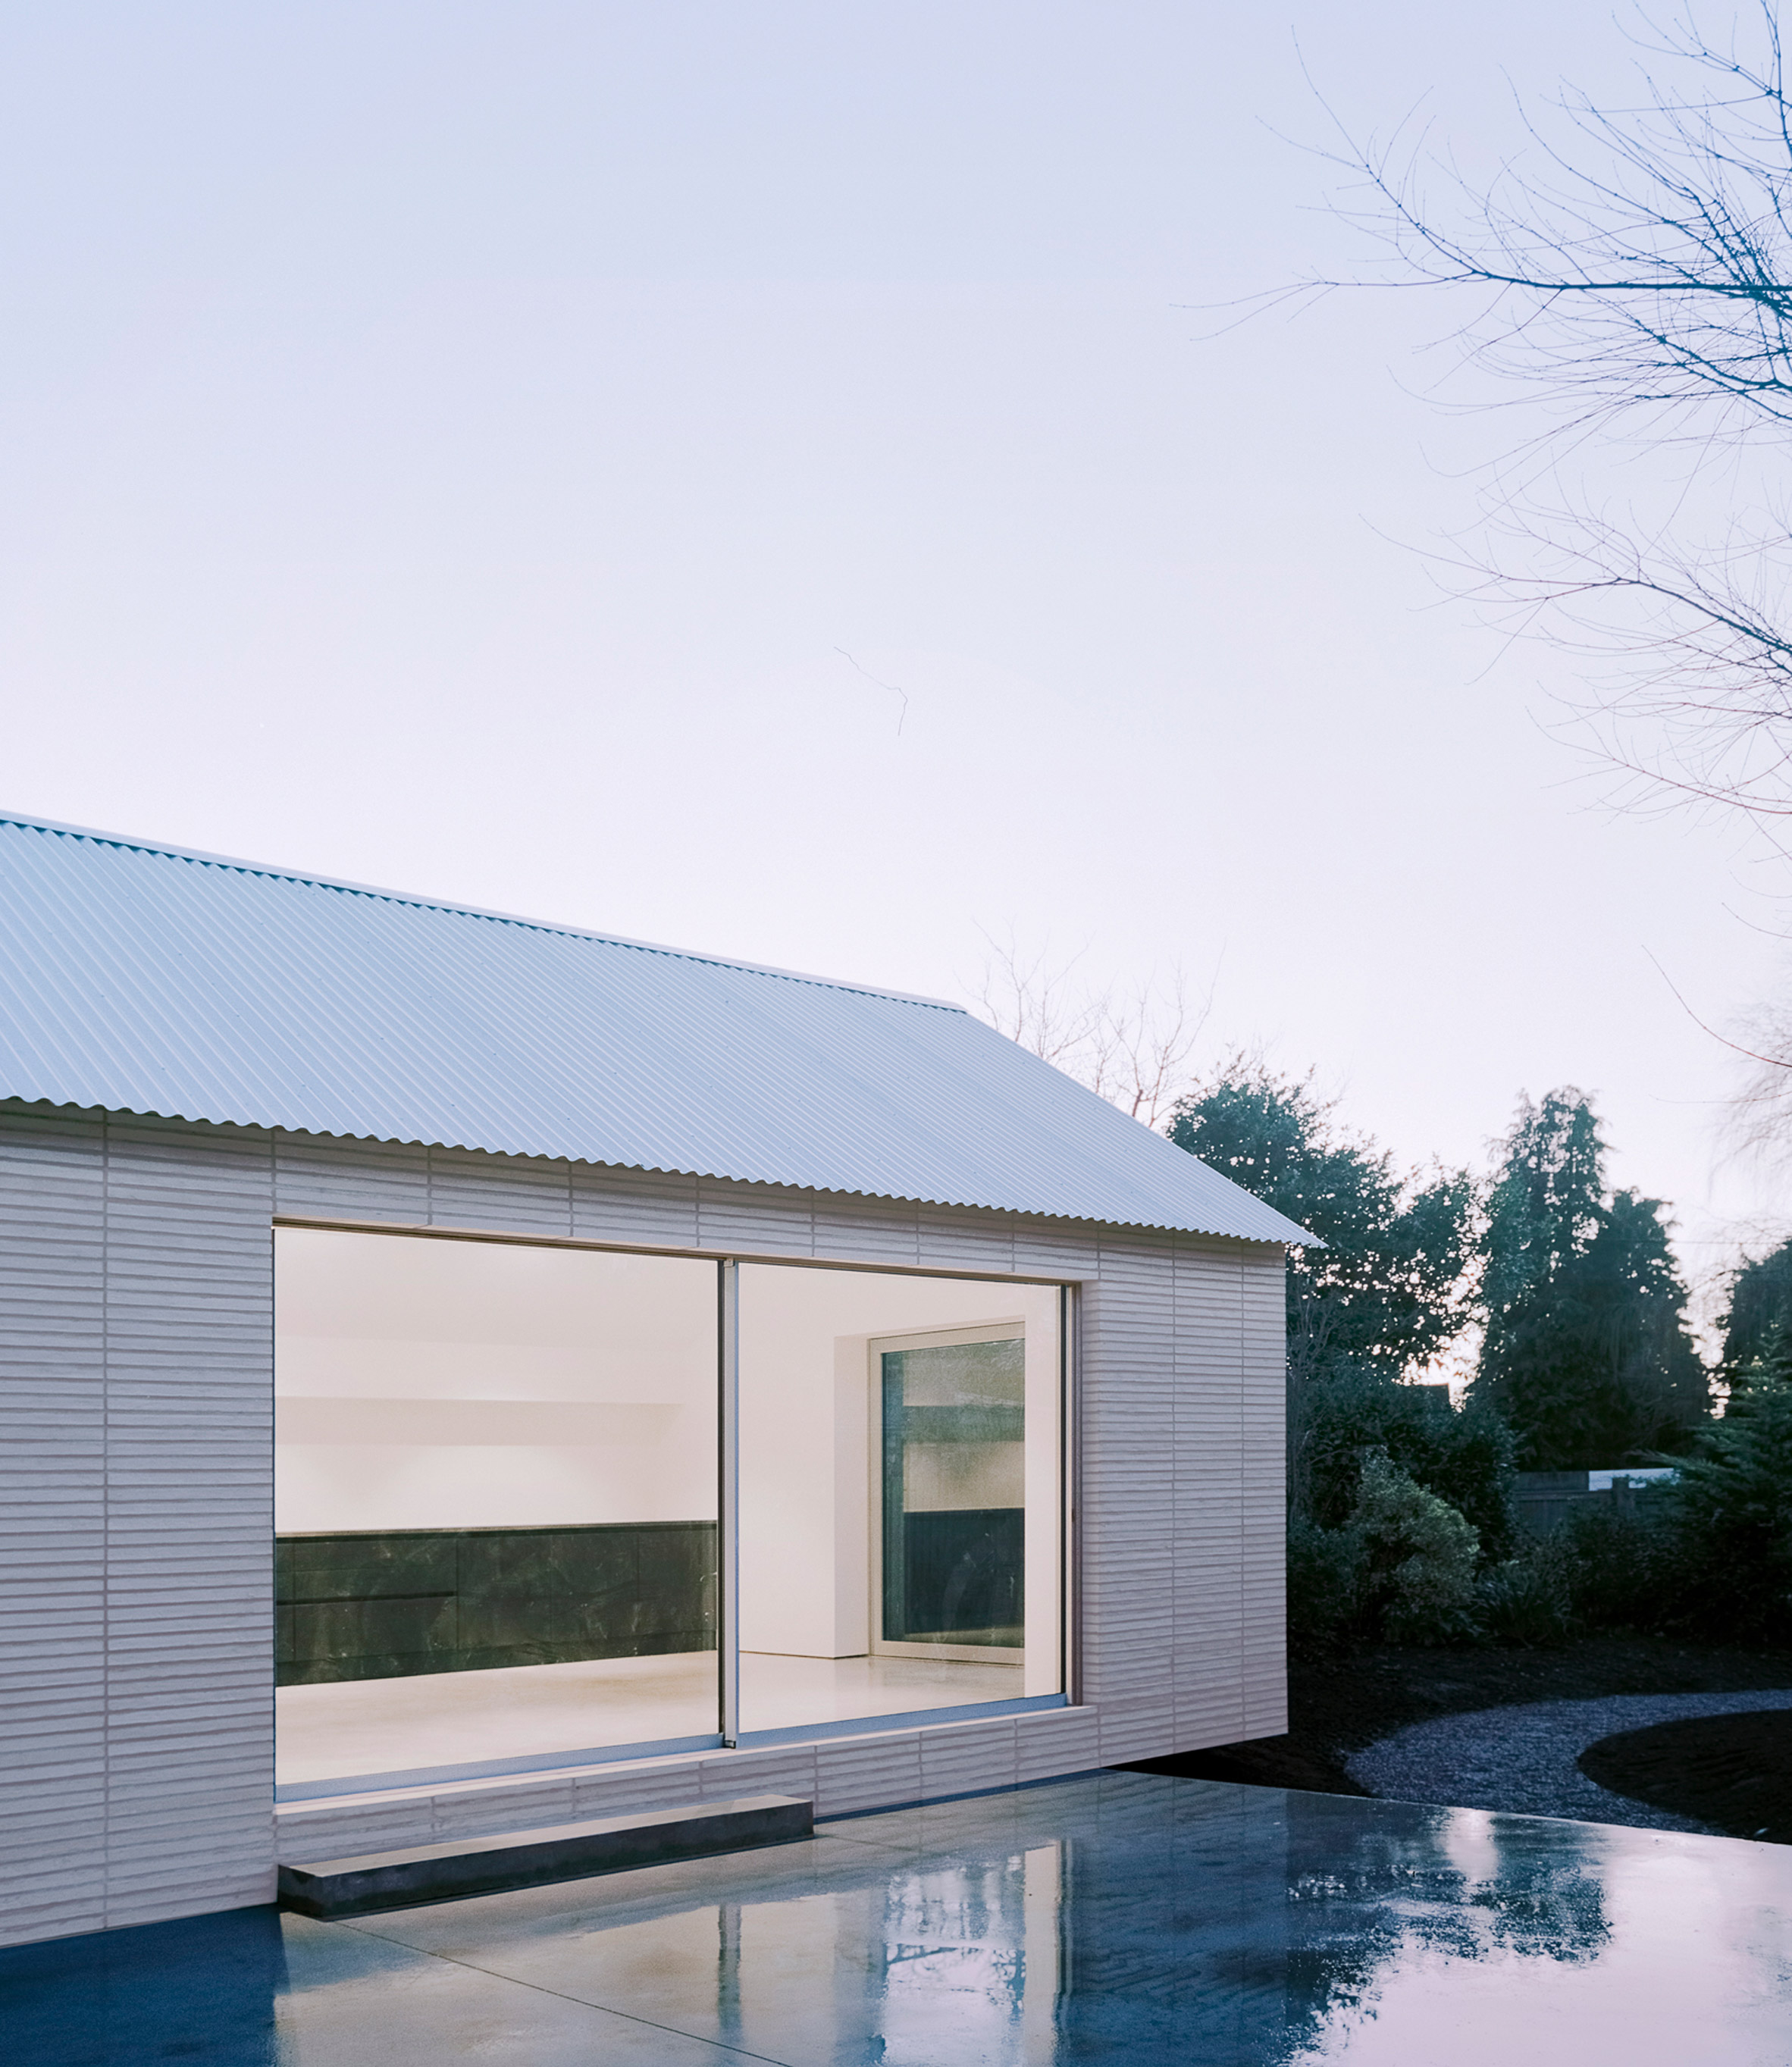 Over The Edge minimalist house by Jonathan Burlow